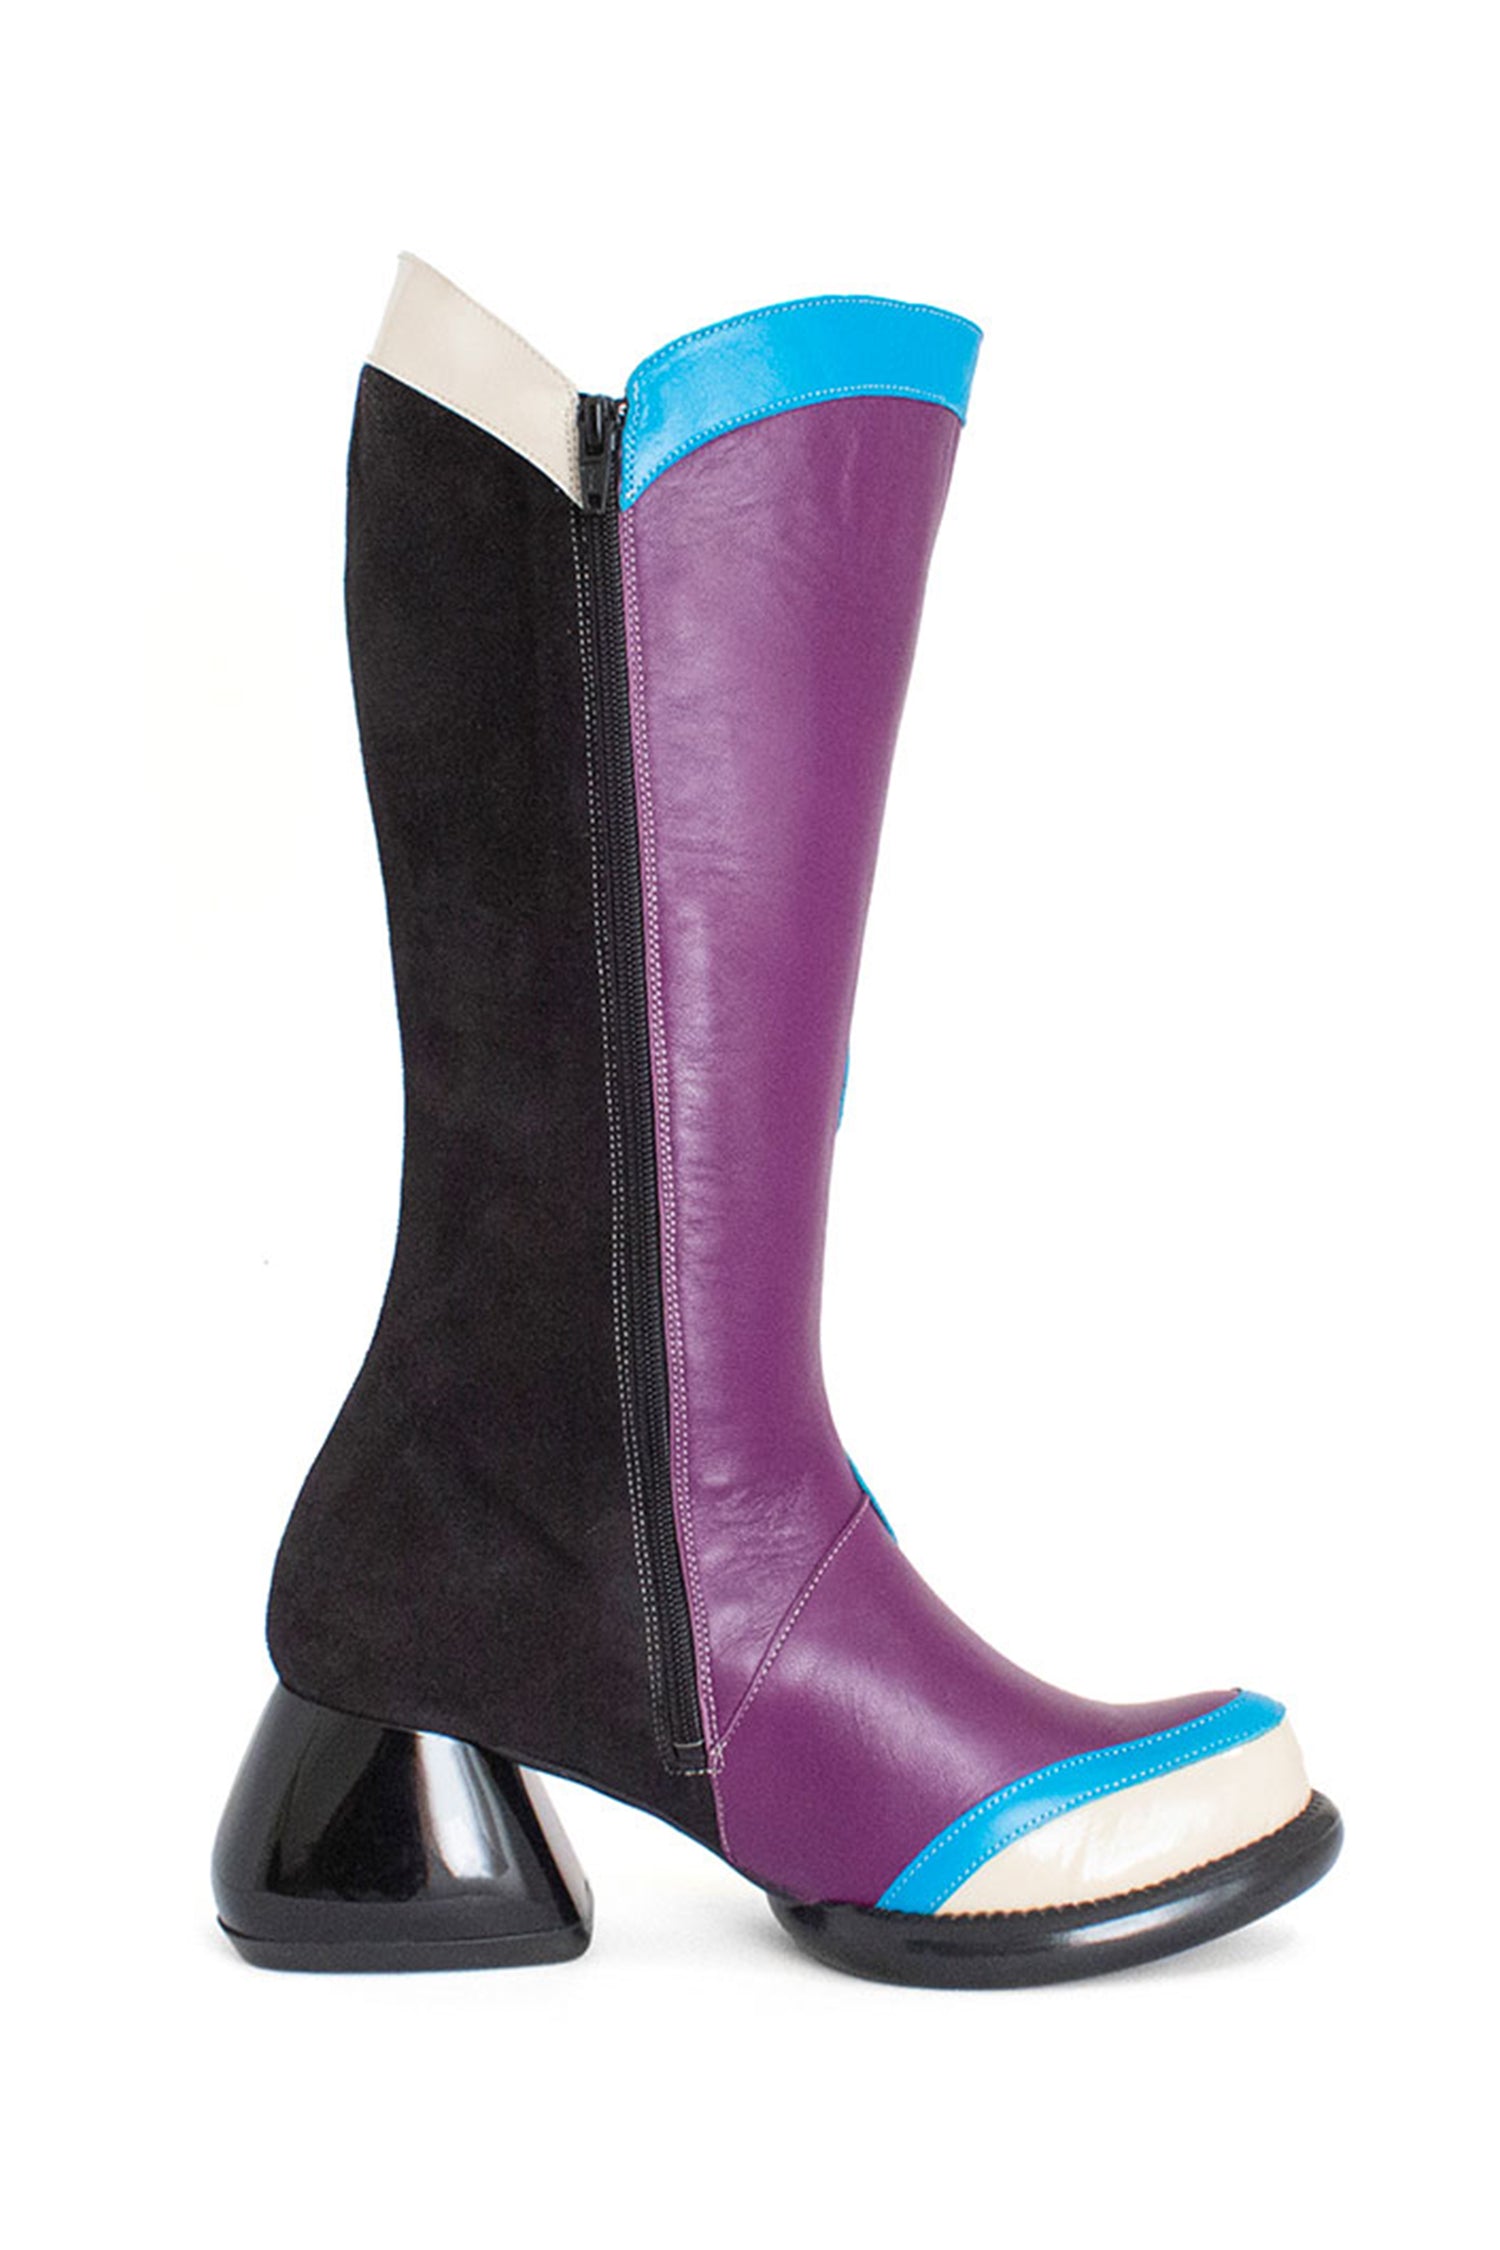 Anna Sui x John Fluevog Warhol Boot Orchid, back, sole and pyramidal heel is black